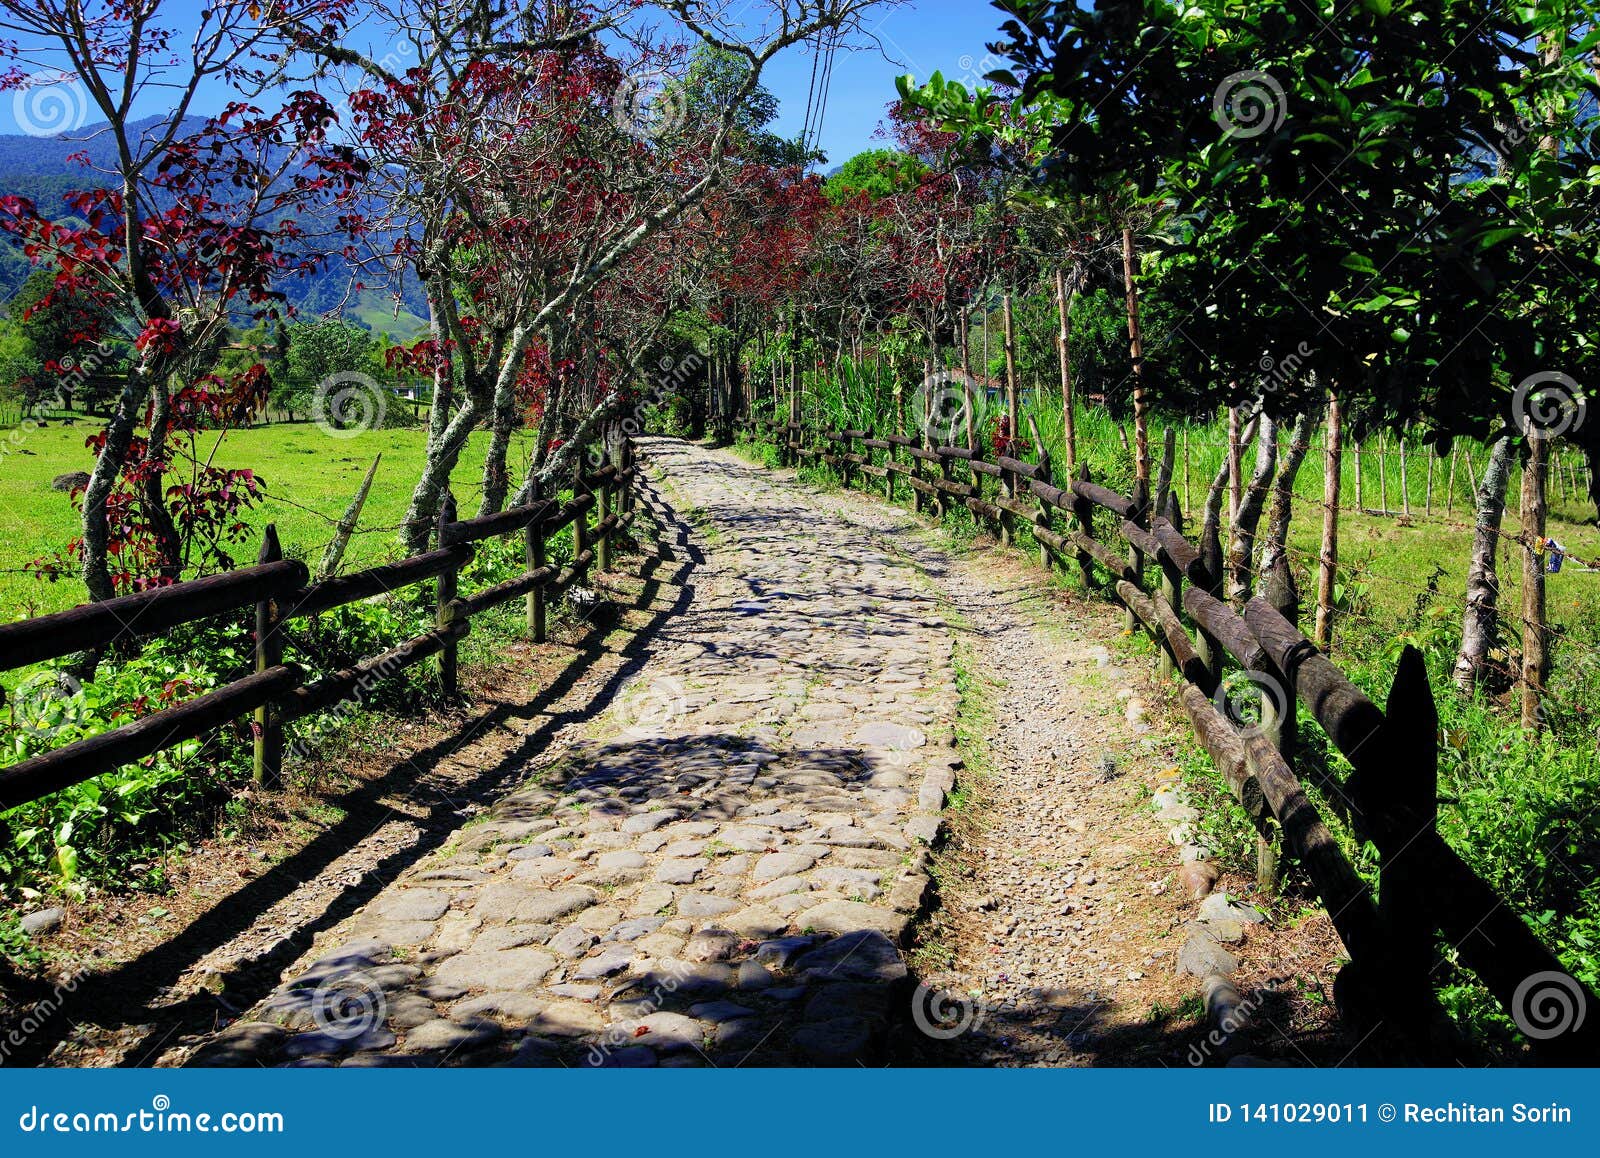 path to the jungle in cordiliera central, near jardin town.